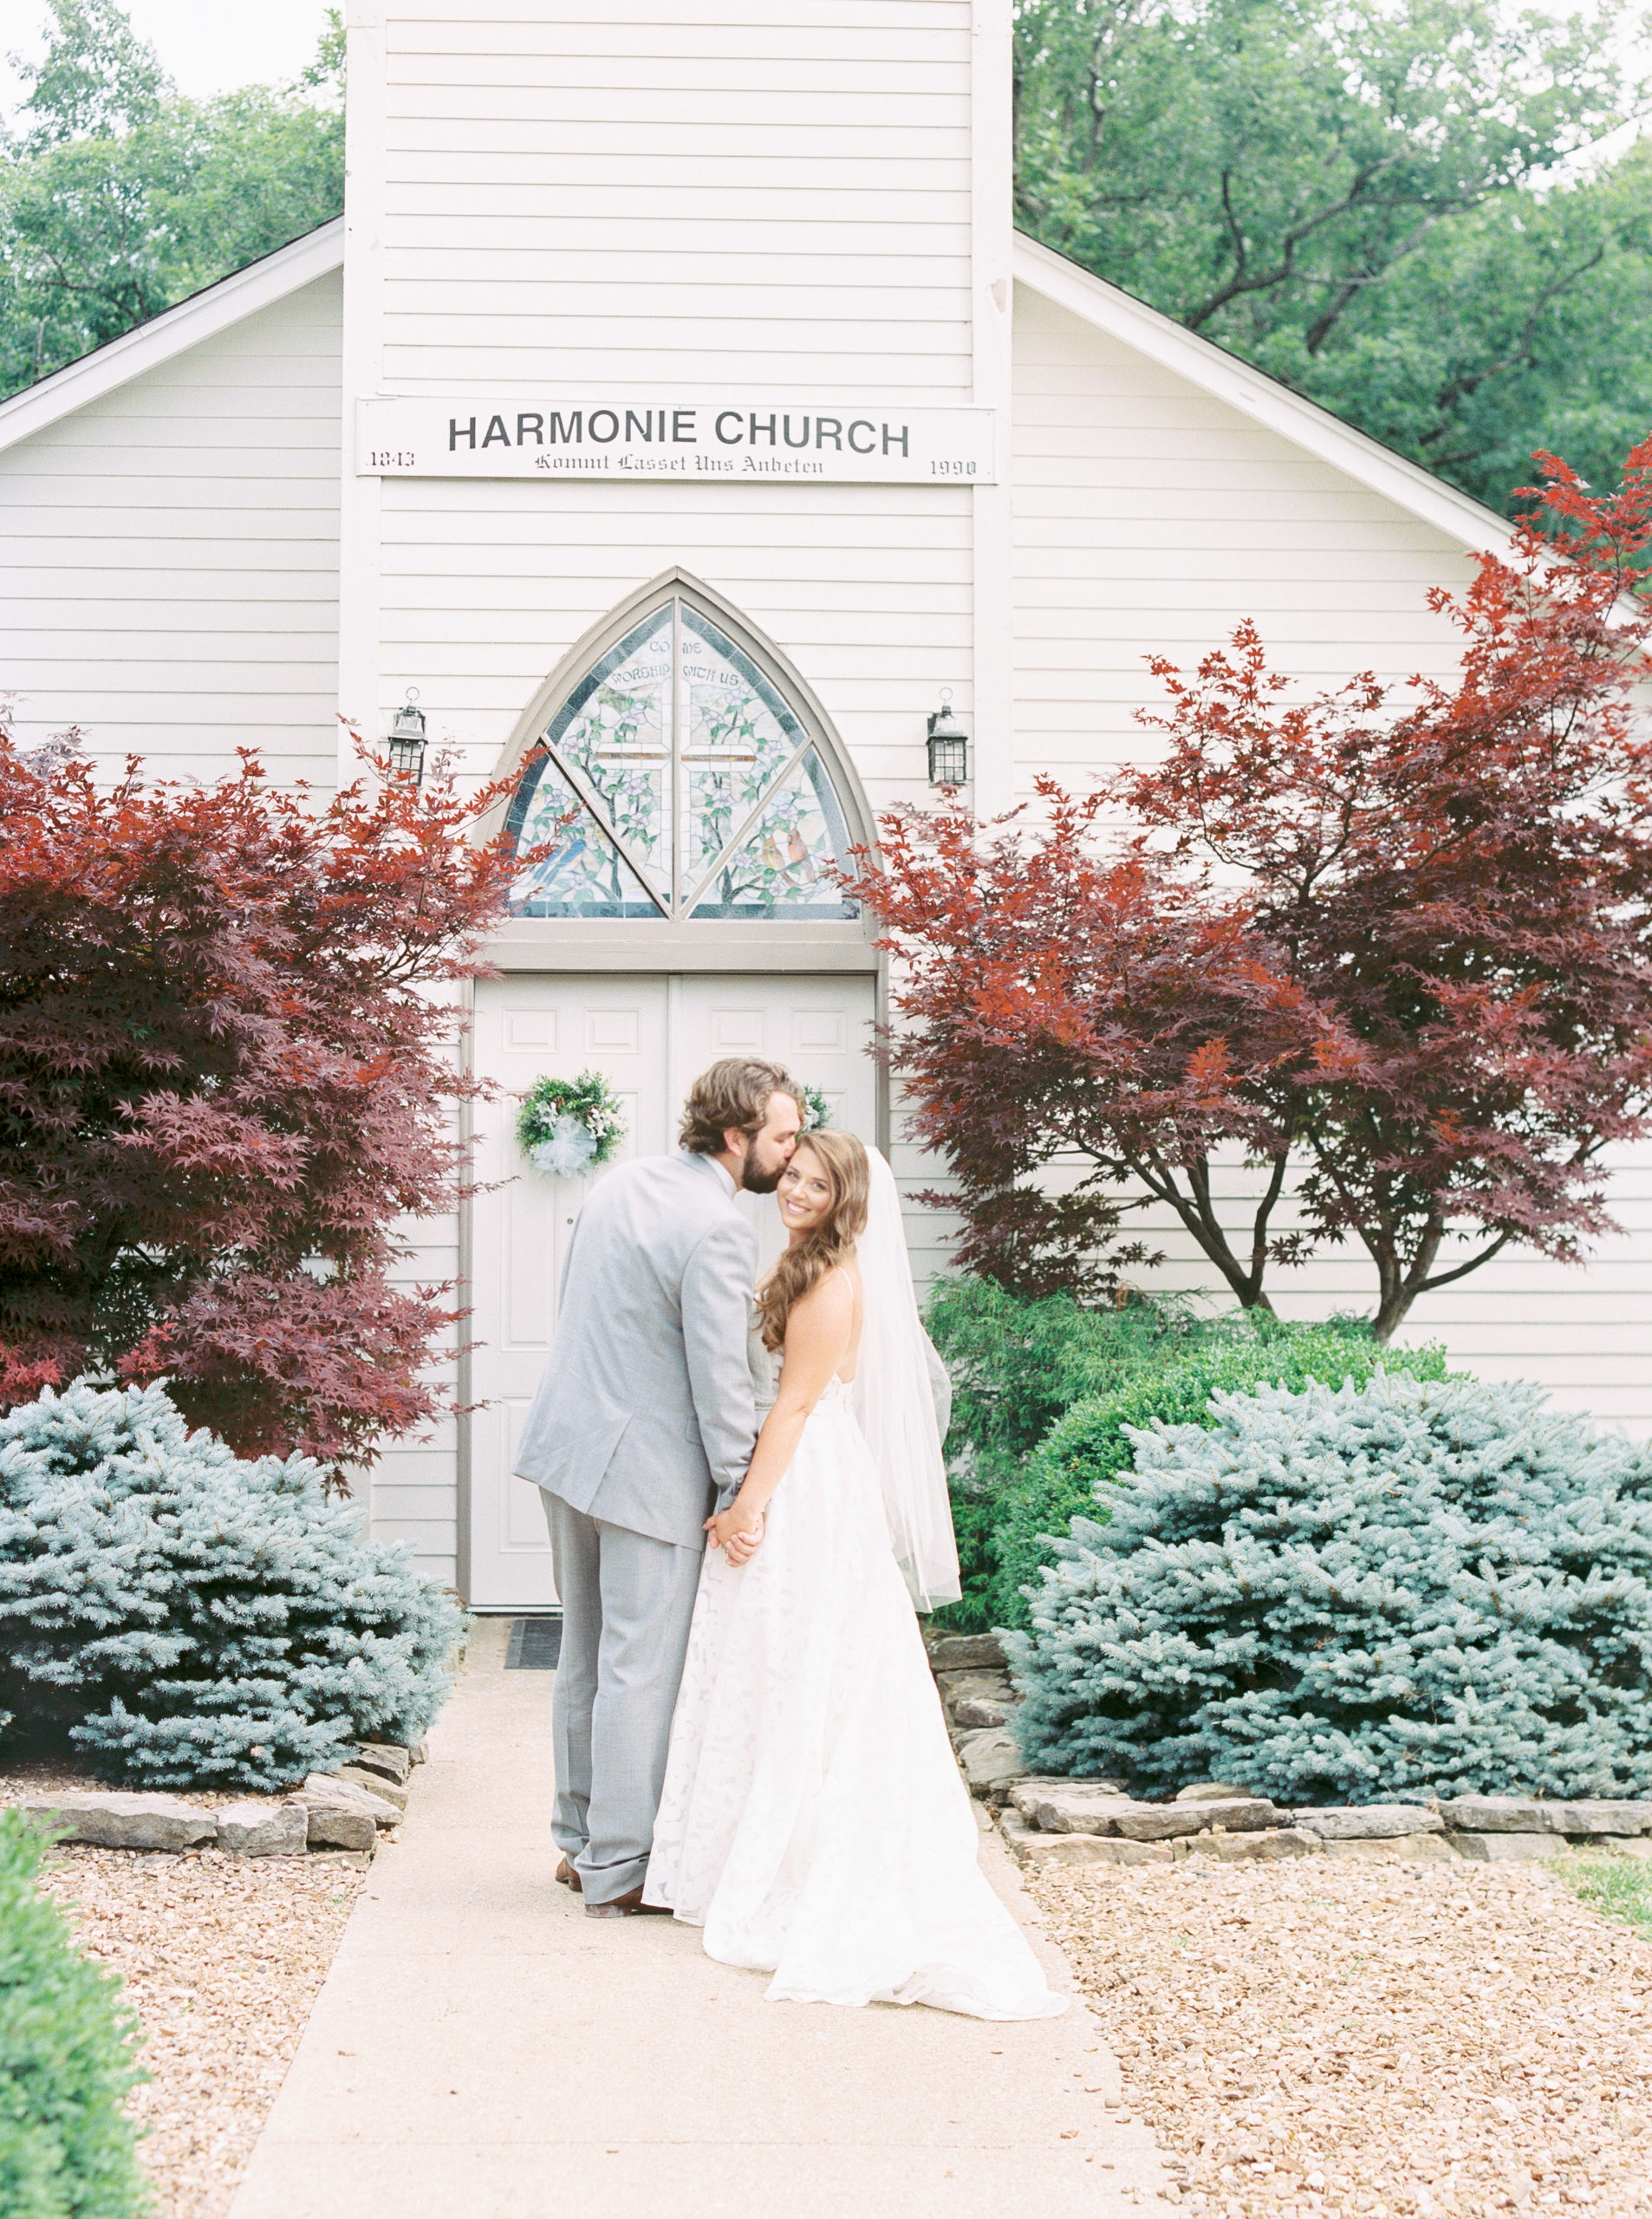 Innsbrook Missouri harmonie church wedding